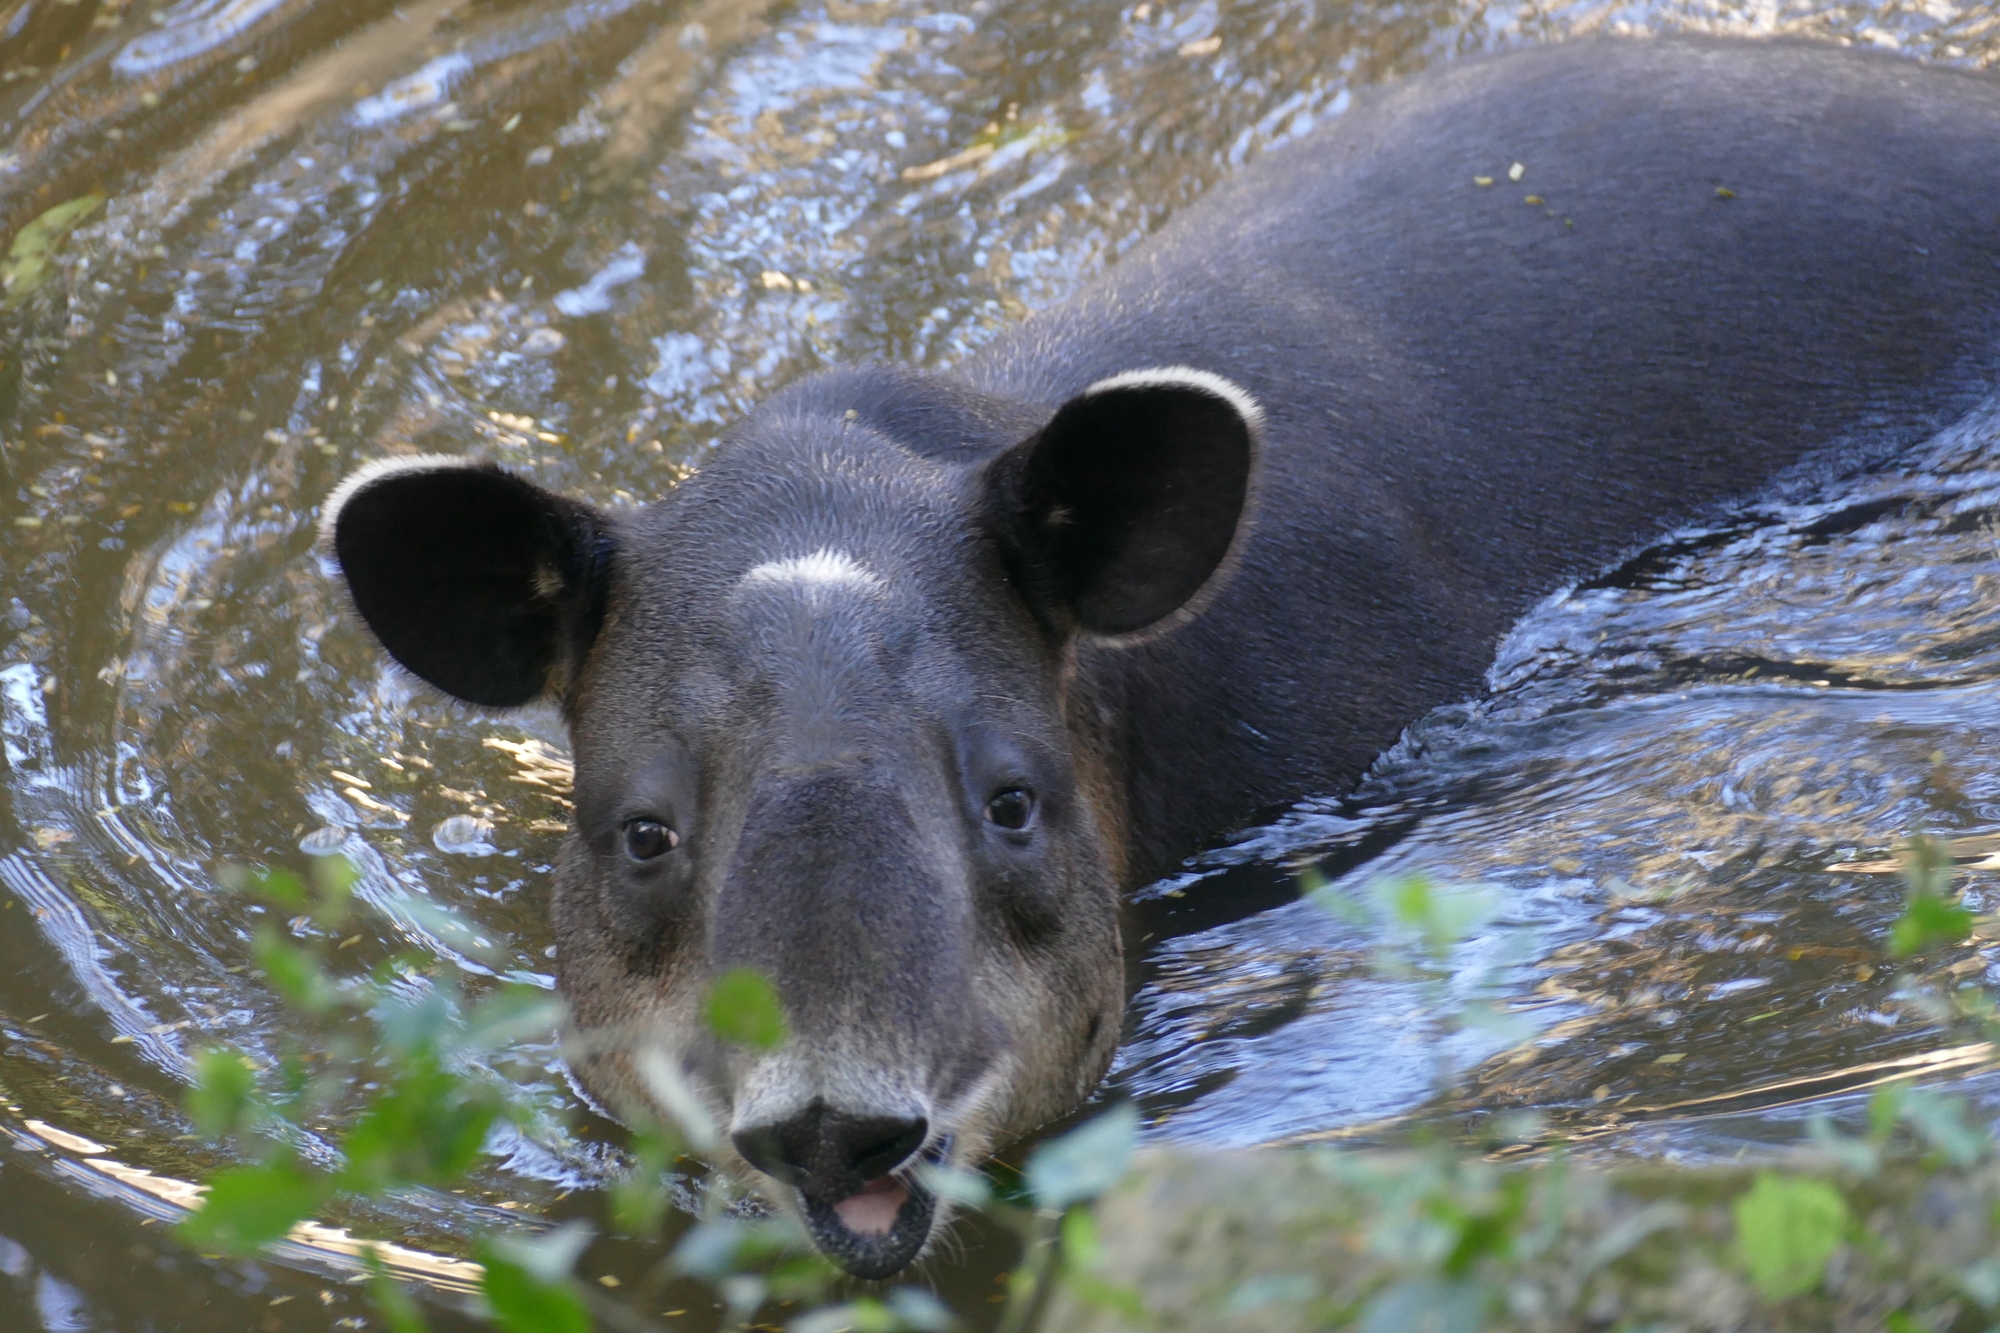 Baird's tapir. Image credit: Courtesy of Bernard Dupont, Flickr.